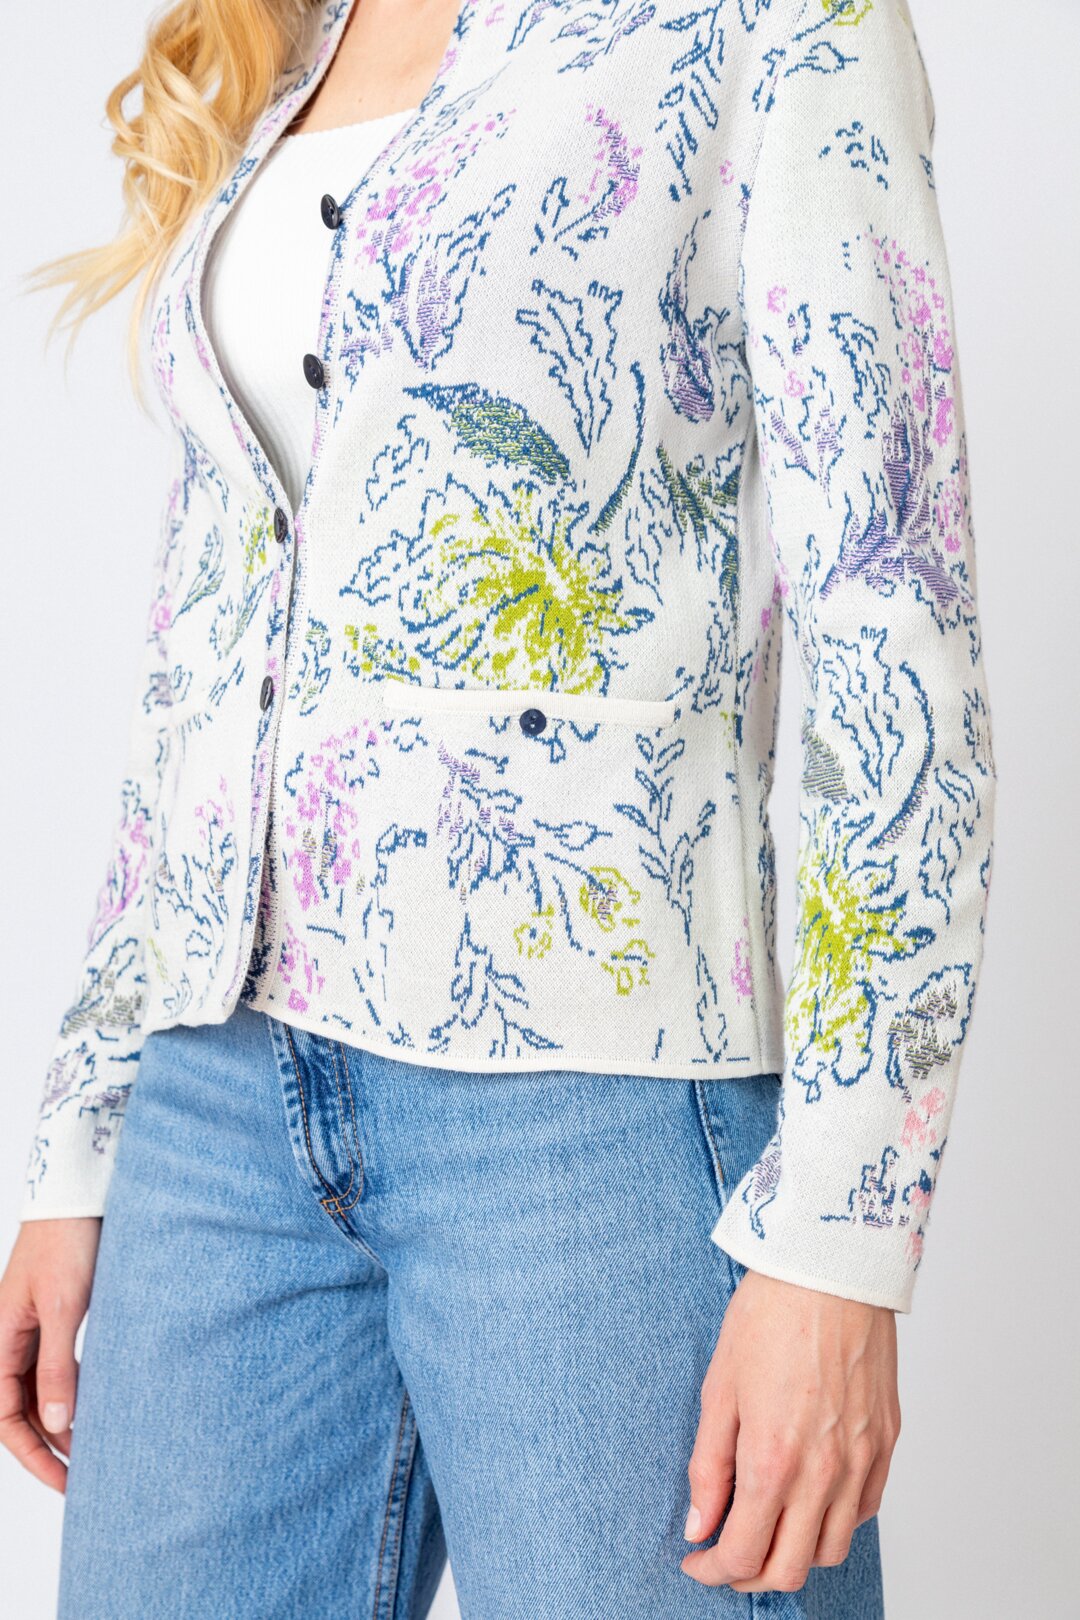 Jacquard Jacket, Flower Pattern